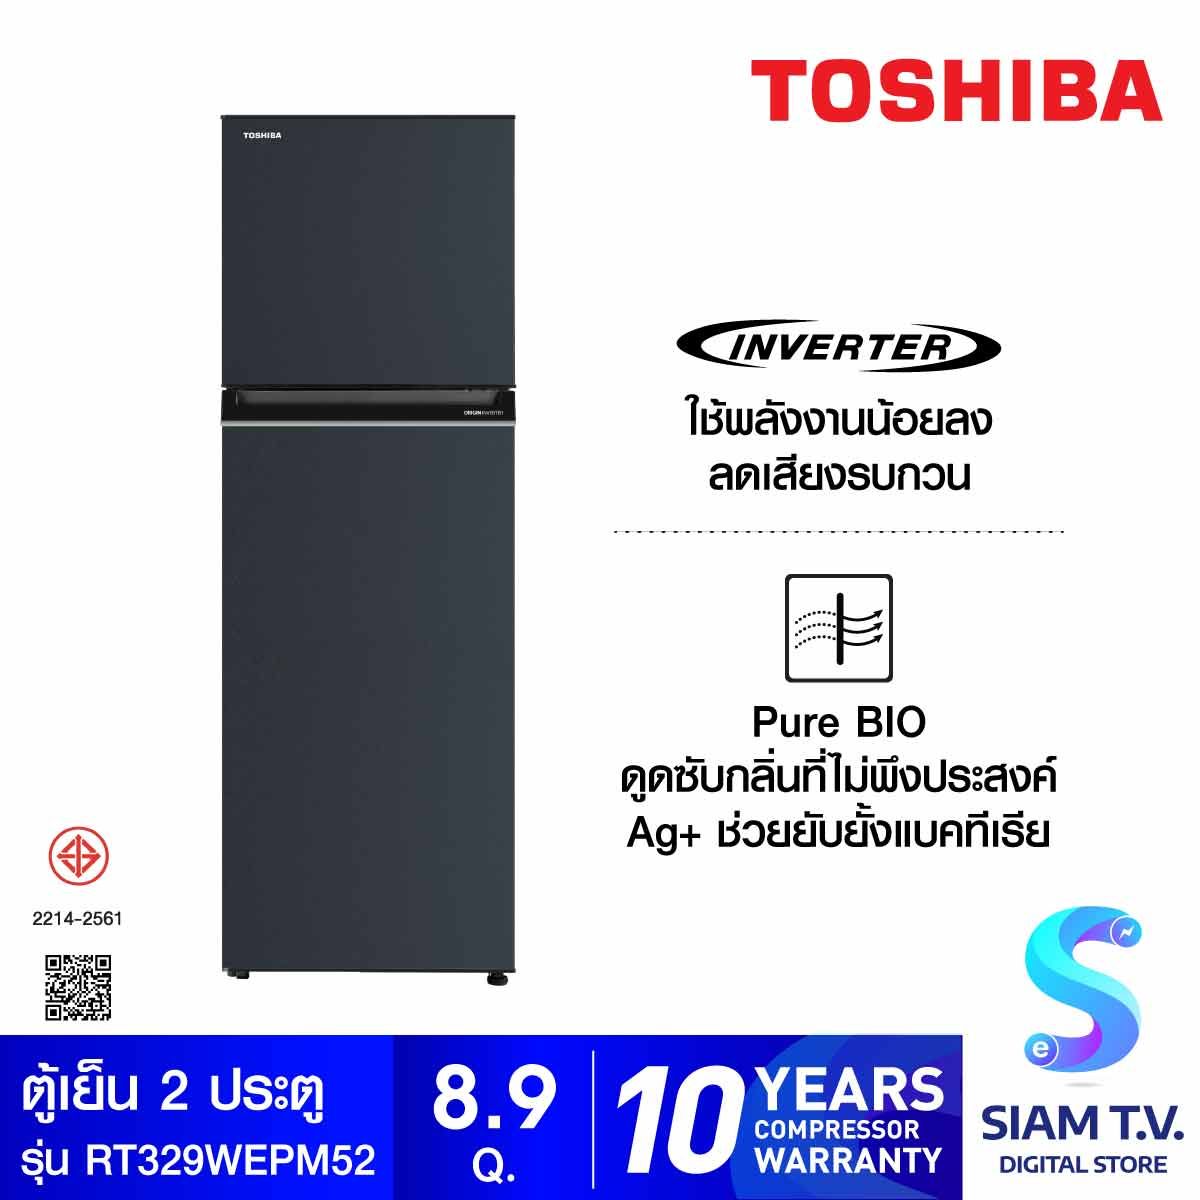 TOSHIBA  ตู้เย็น 2 ประตู 8.9Q  INVERTER สีเทาเข้ม  รุ่น GR-RT329WE-PMTH(52)